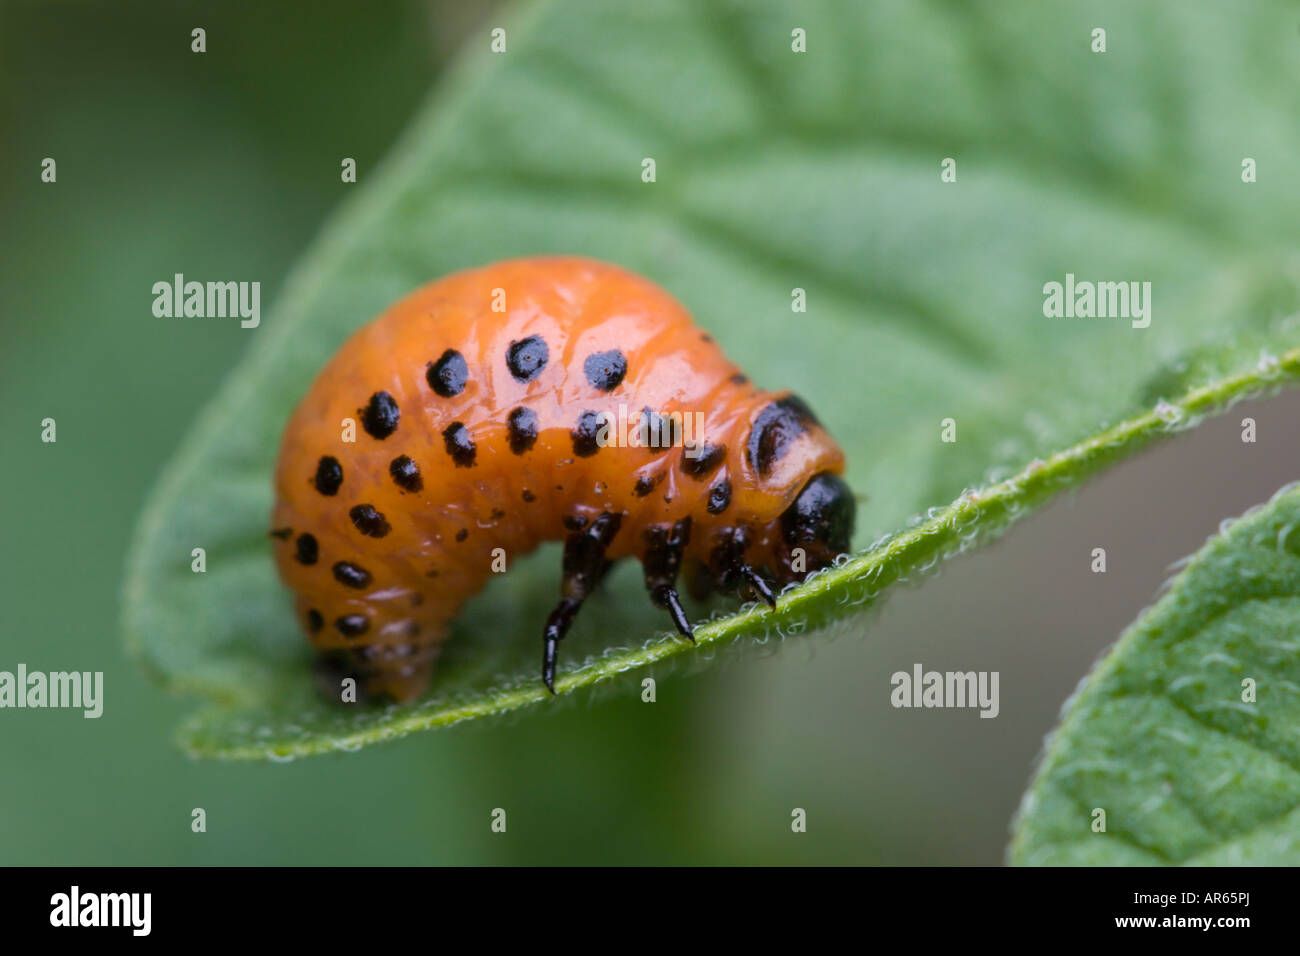 close up of potato beetle grub insect Stock Photo